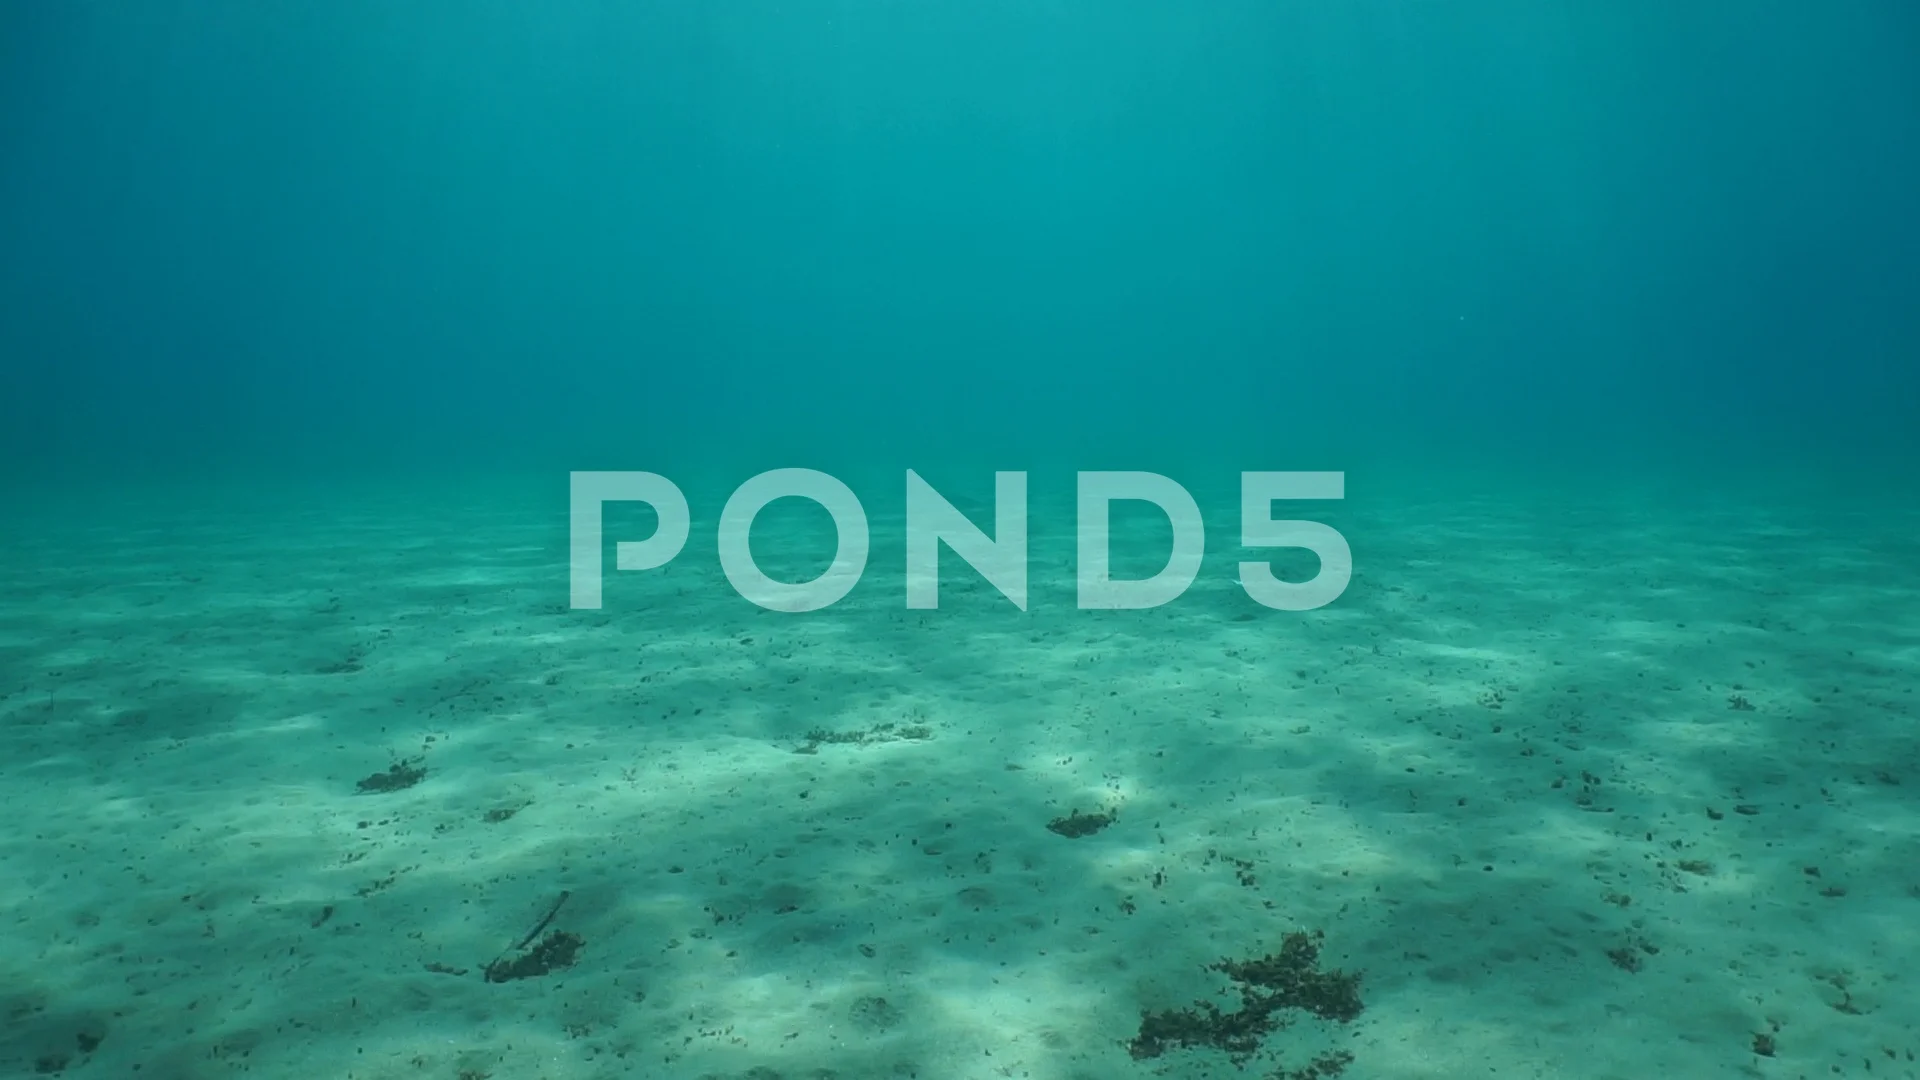 Underwater sandy seabed in Mediterranean, Stock Video